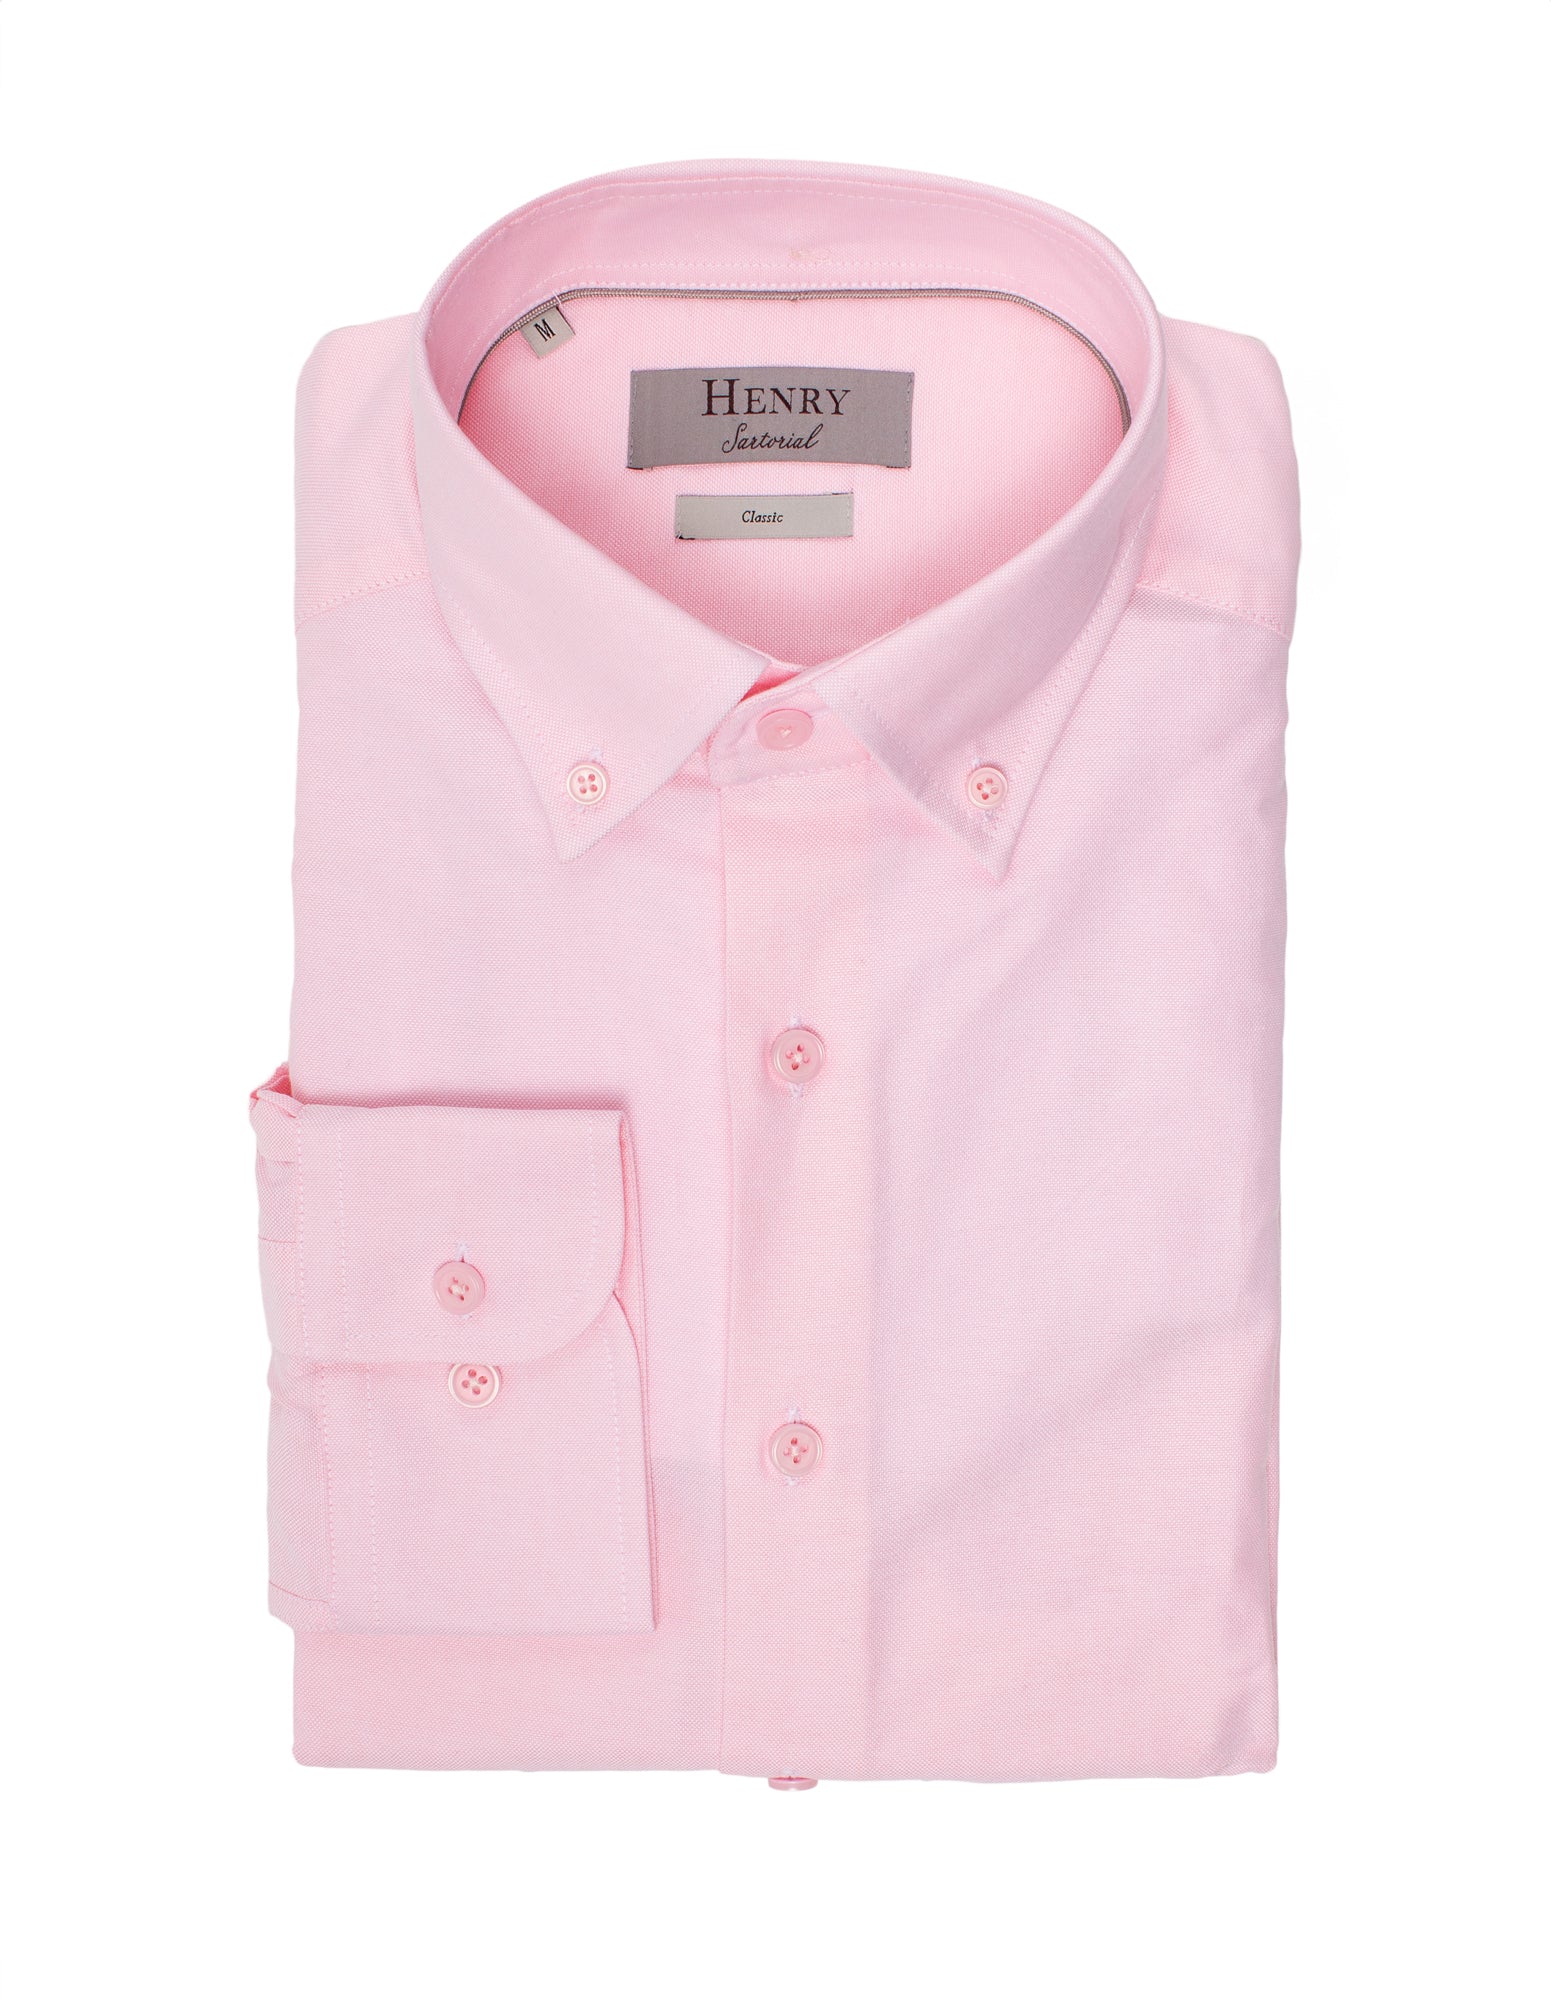 HENRY SARTORIAL Casual Plain Shirt PINK - Henry BucksShirts38AW230084 - PINK - SM